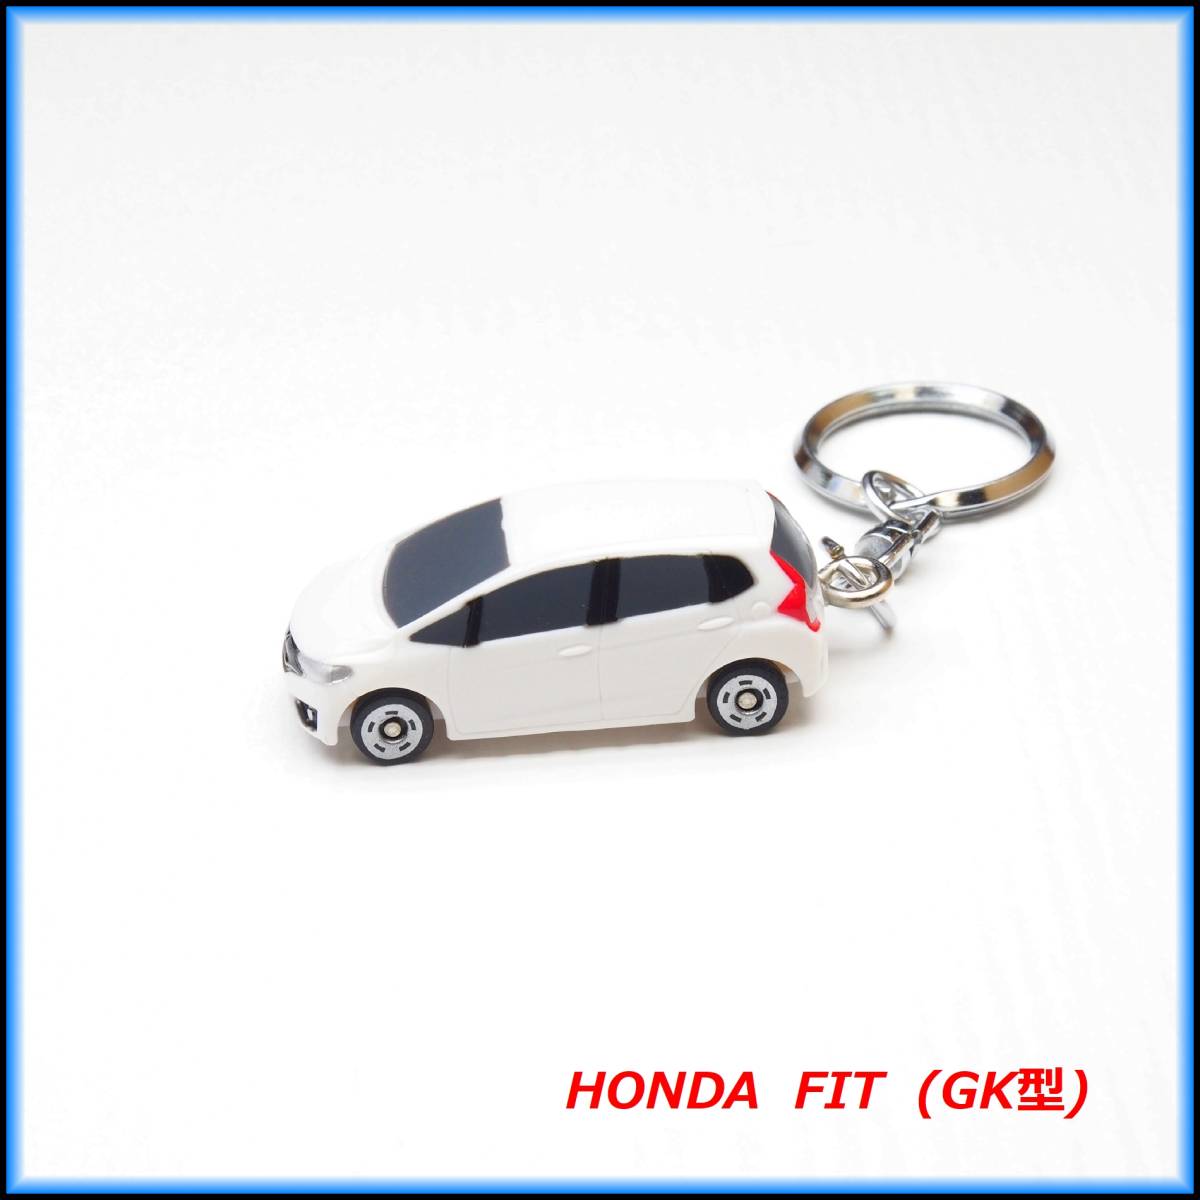  Honda FIT Fit GK миникар ремешок брелок для ключа BBS muffler колесо обвес карбоновый спойлер амортизатор бампер "губа" 